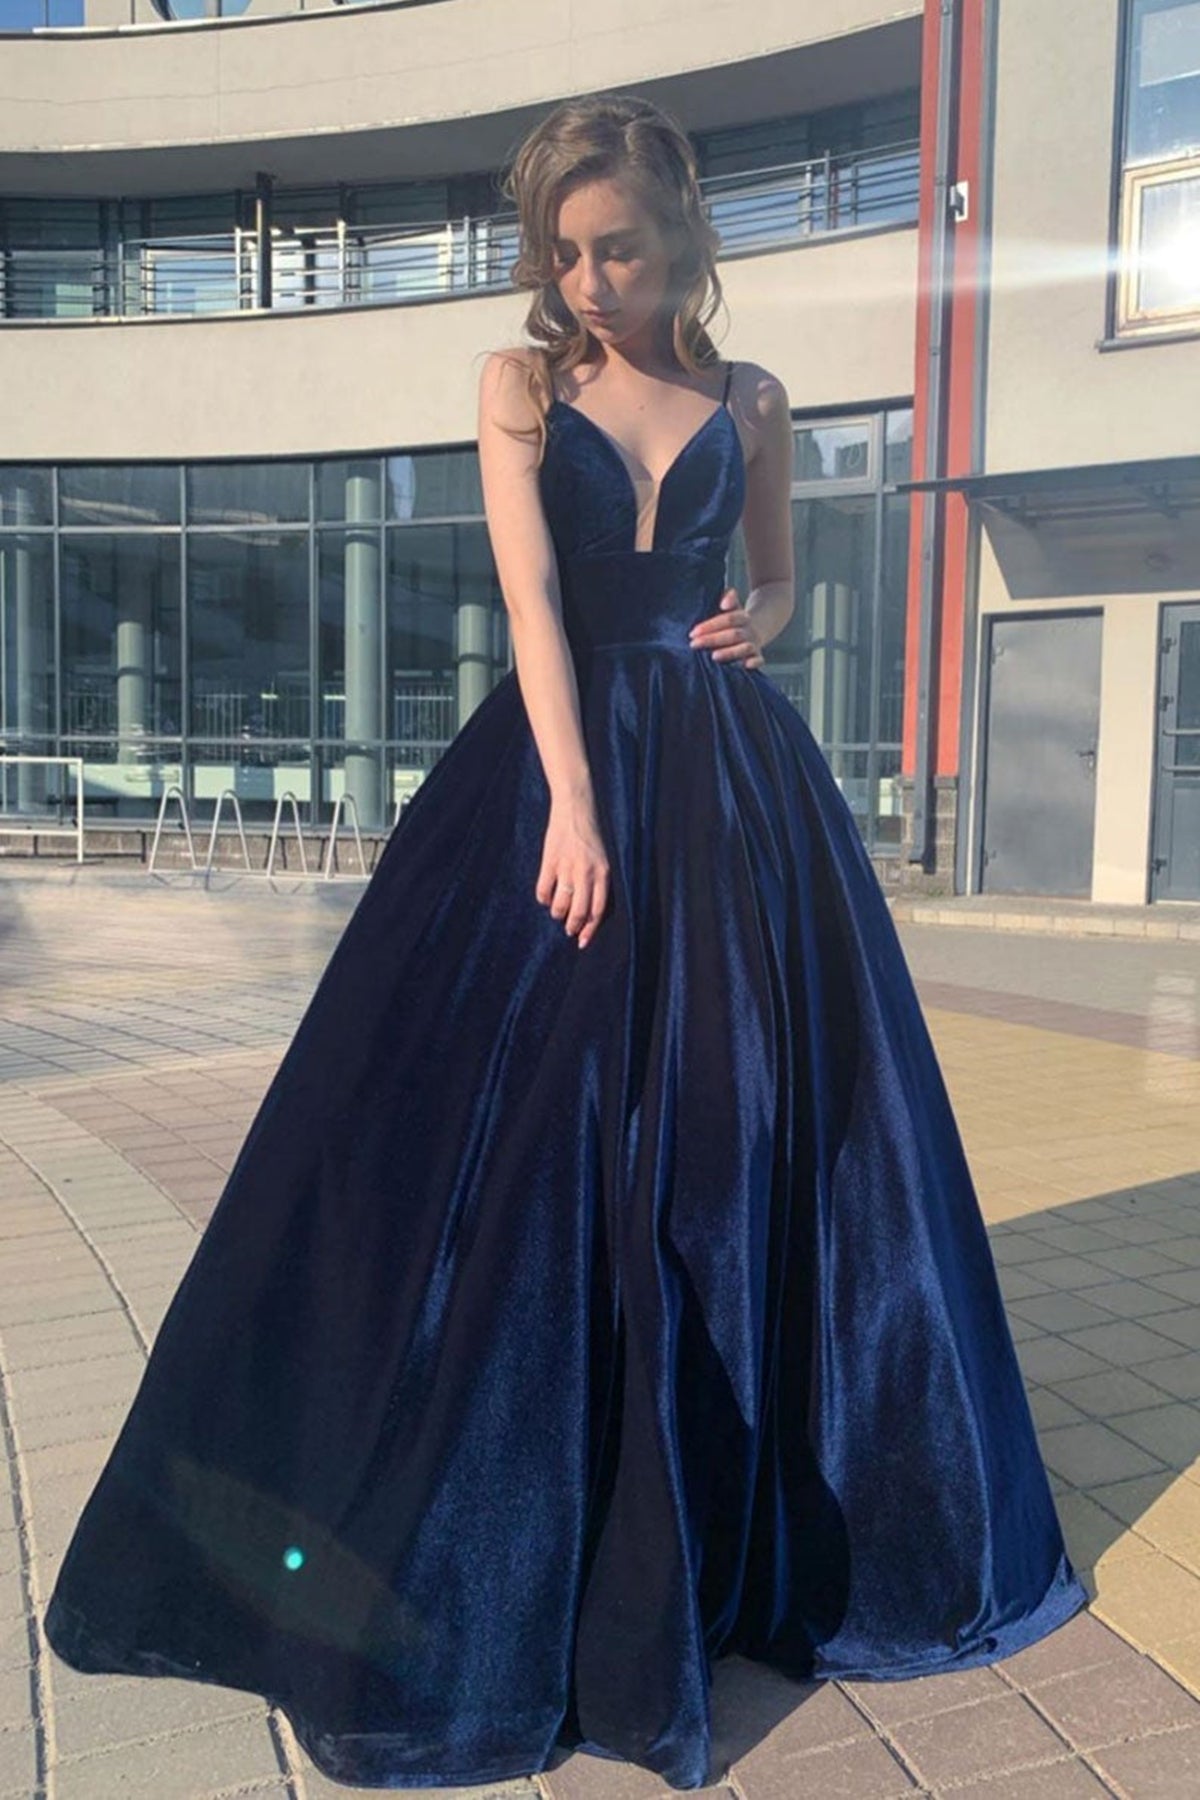 dark blue prom dresses